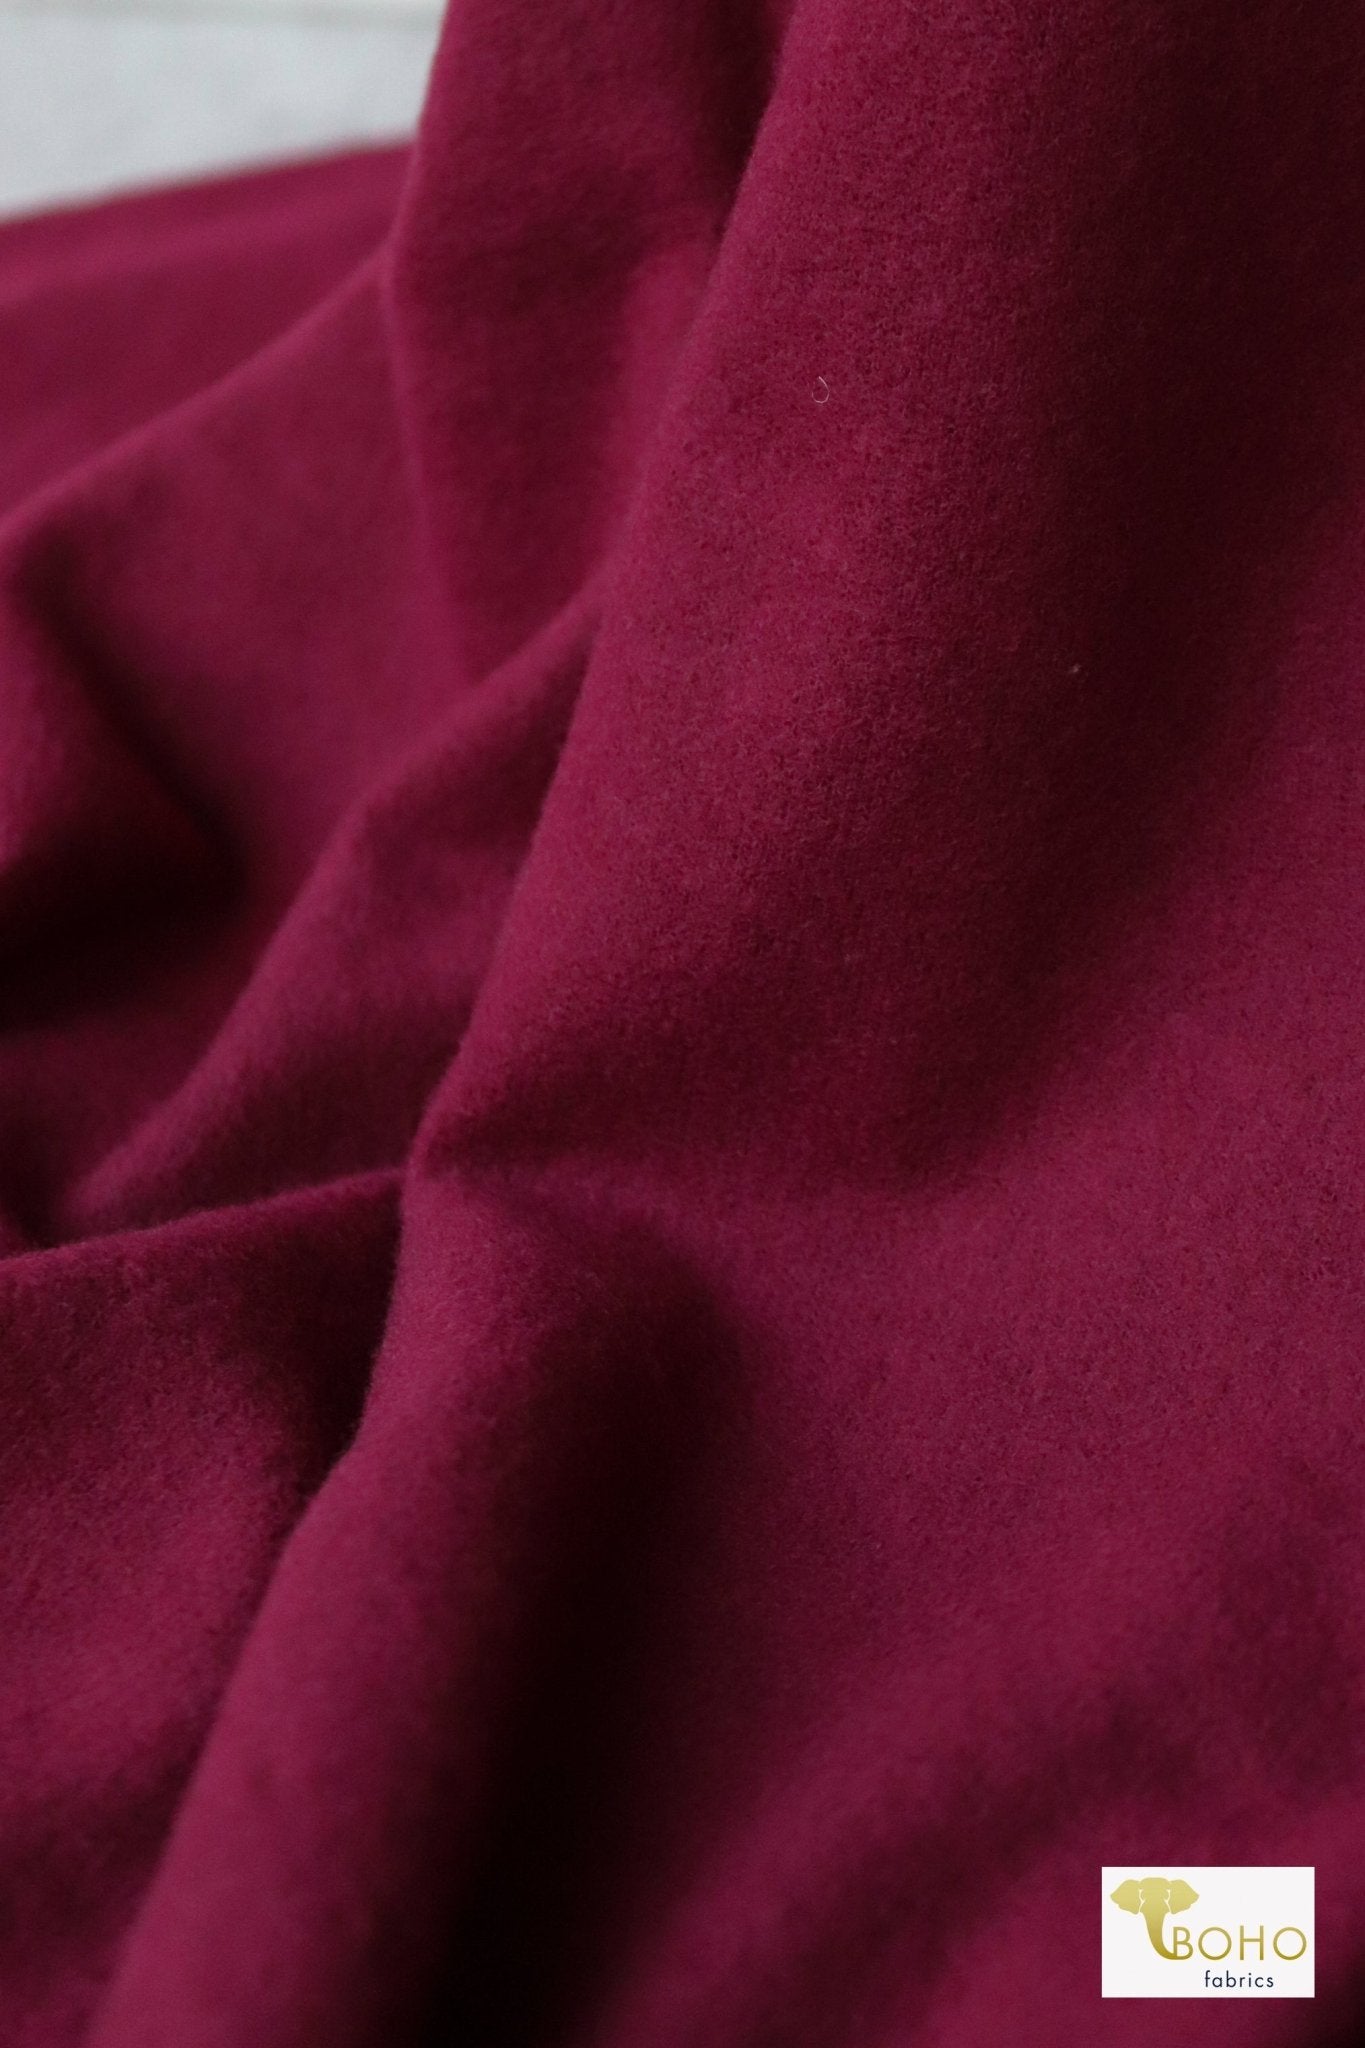 Cranberry Dreams, Brushed Sweater Knit - Boho Fabrics